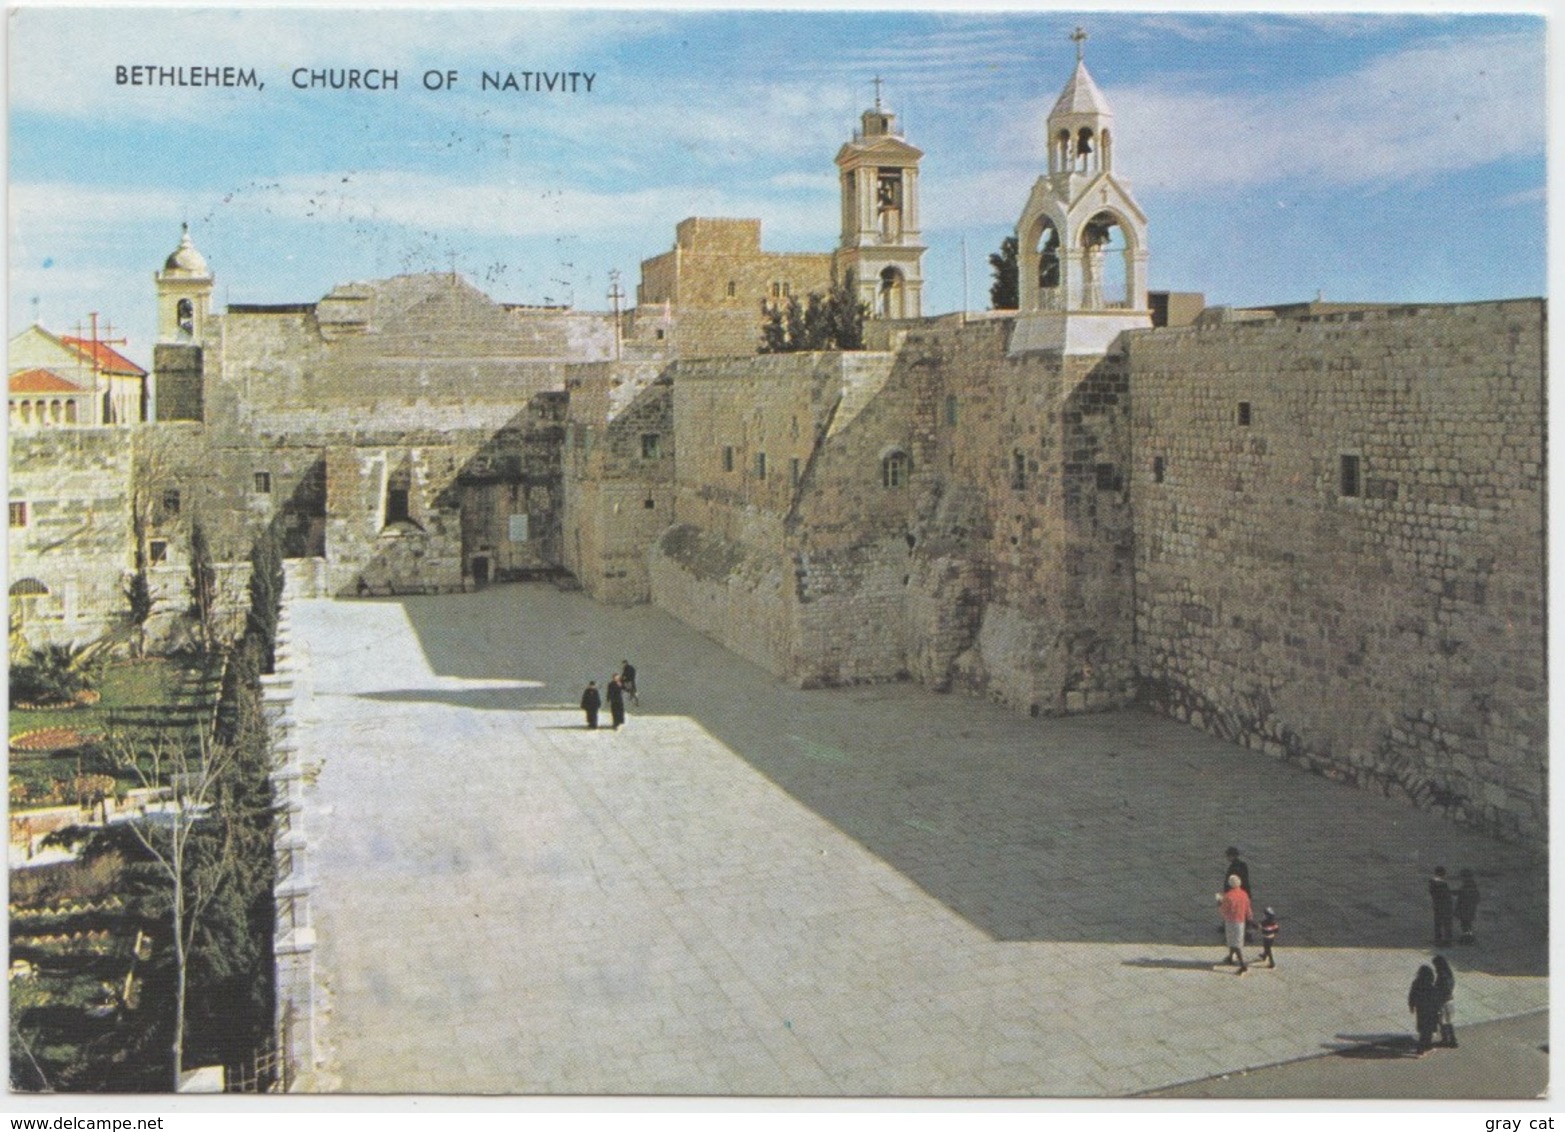 Bethlehem, Church Of Nativity, 1980 Used Postcard [21158] - Holy Places